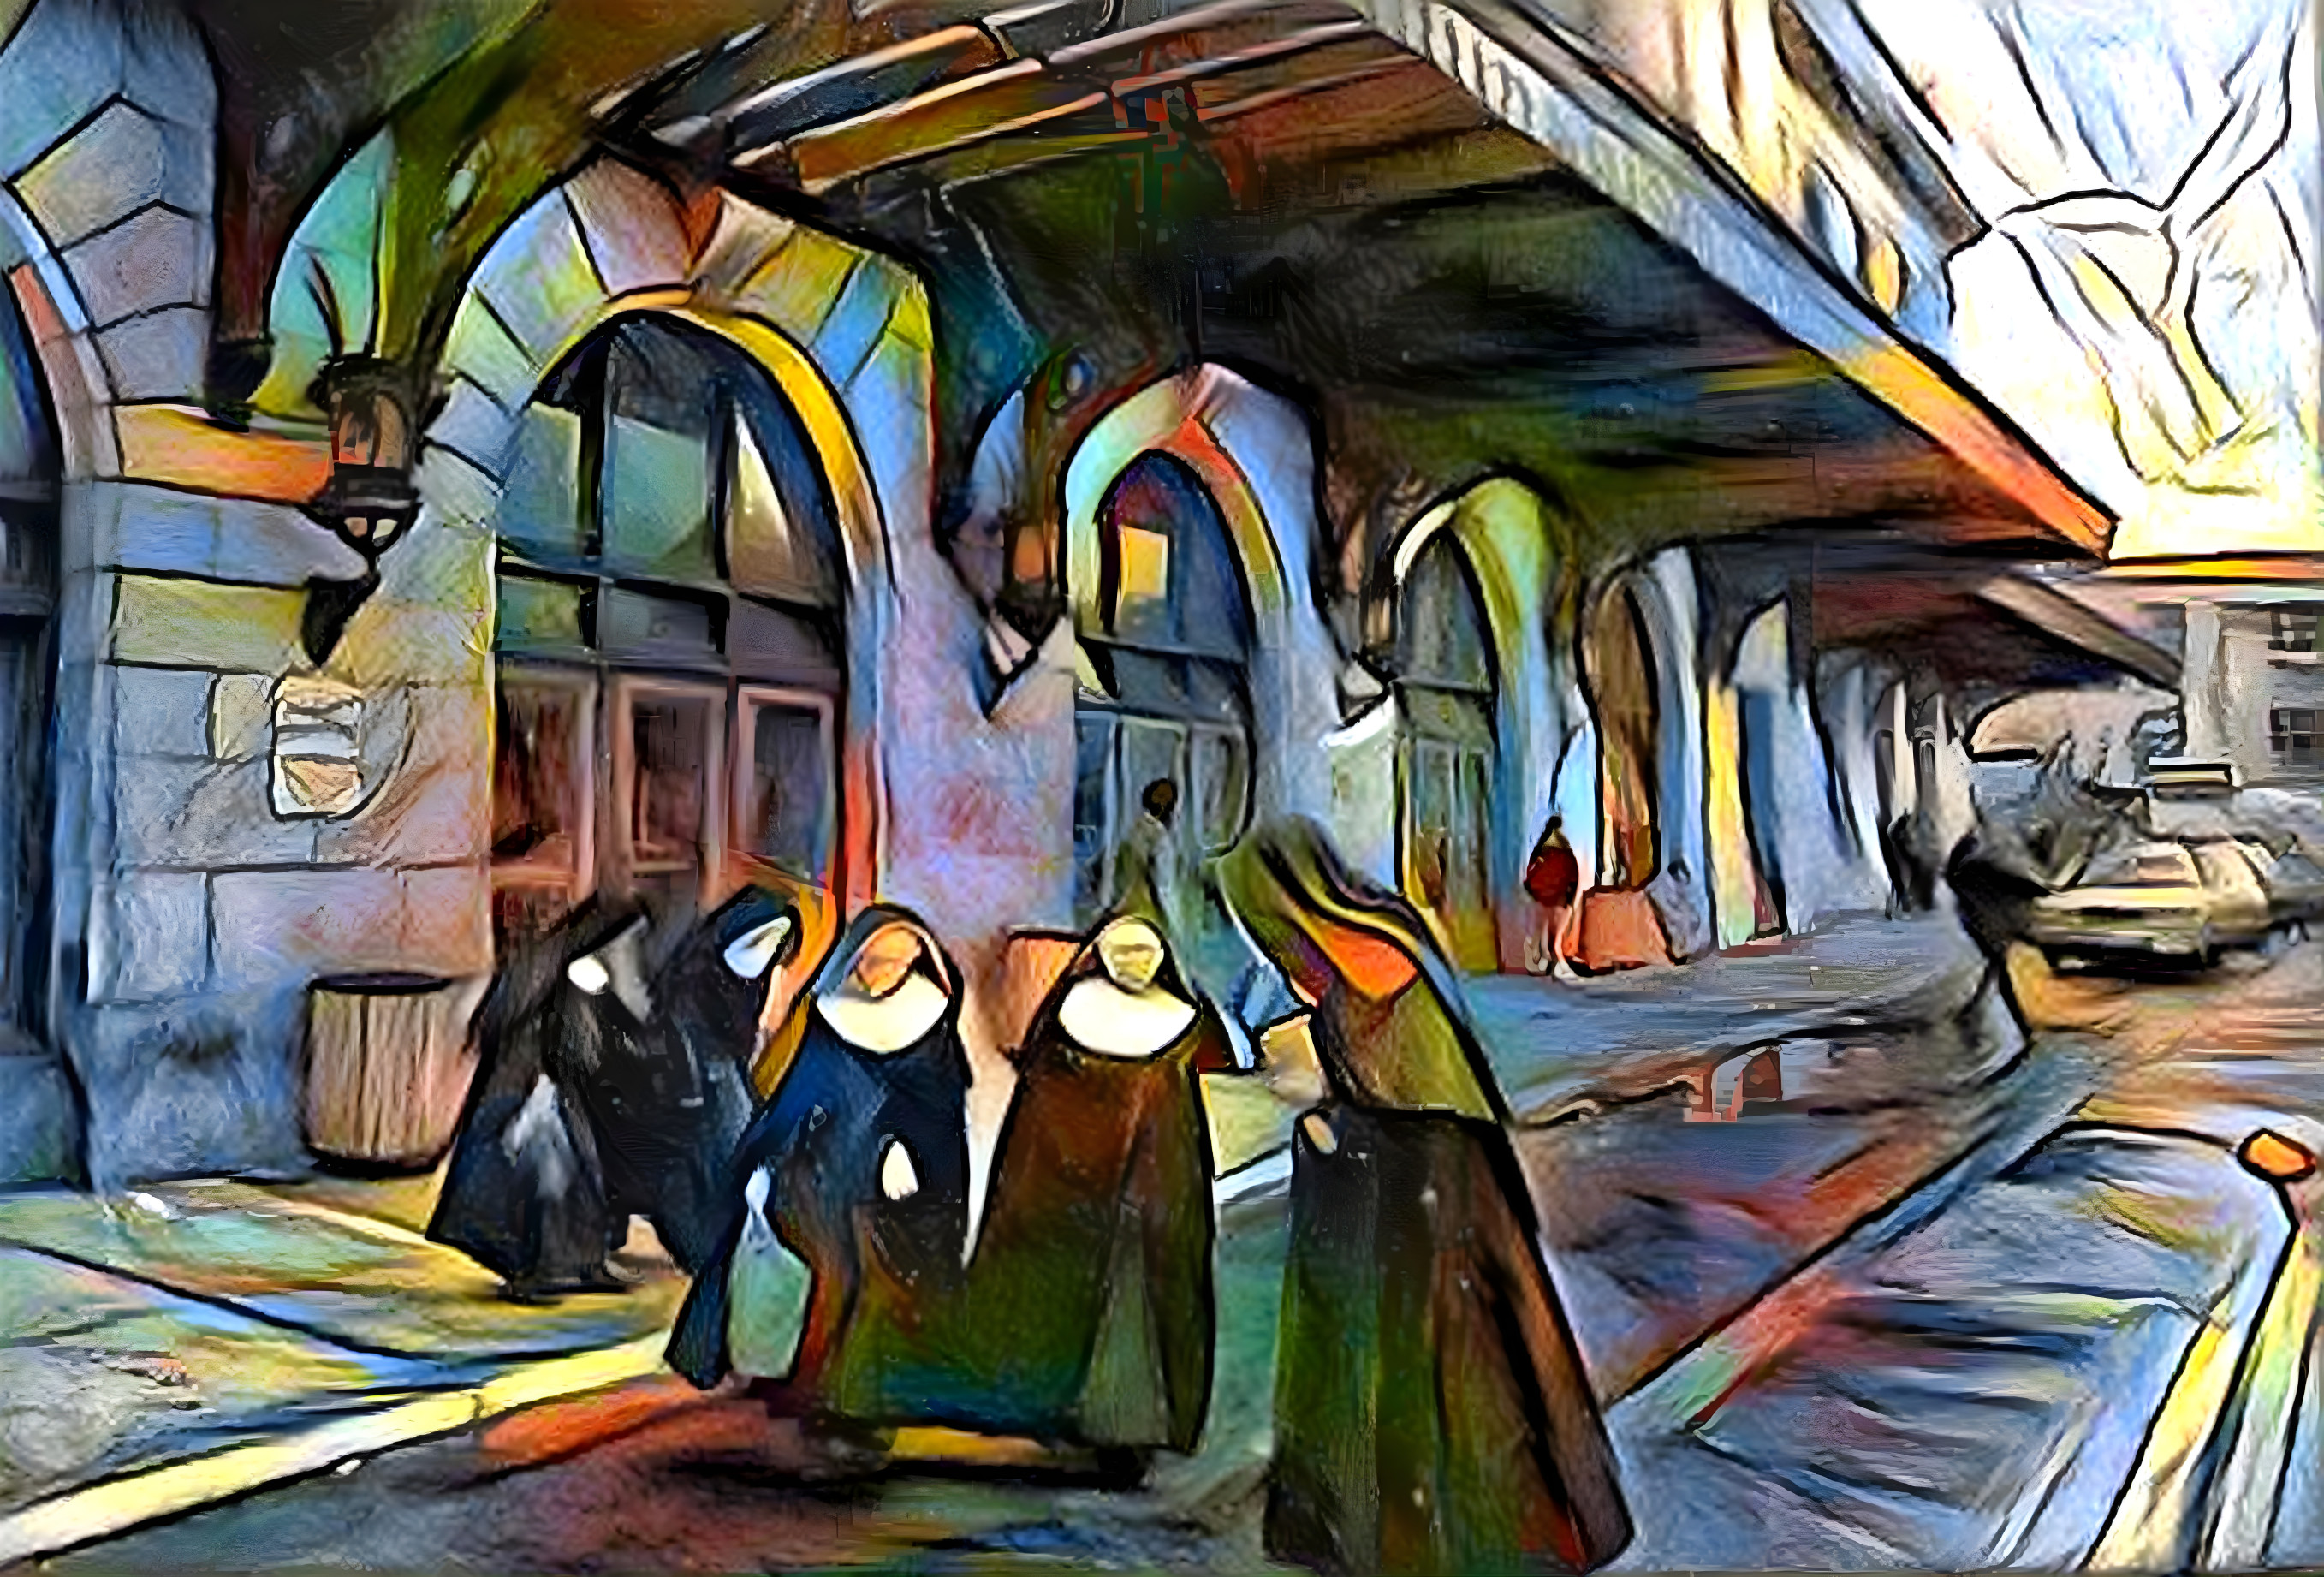 The Nuns of Baltimore